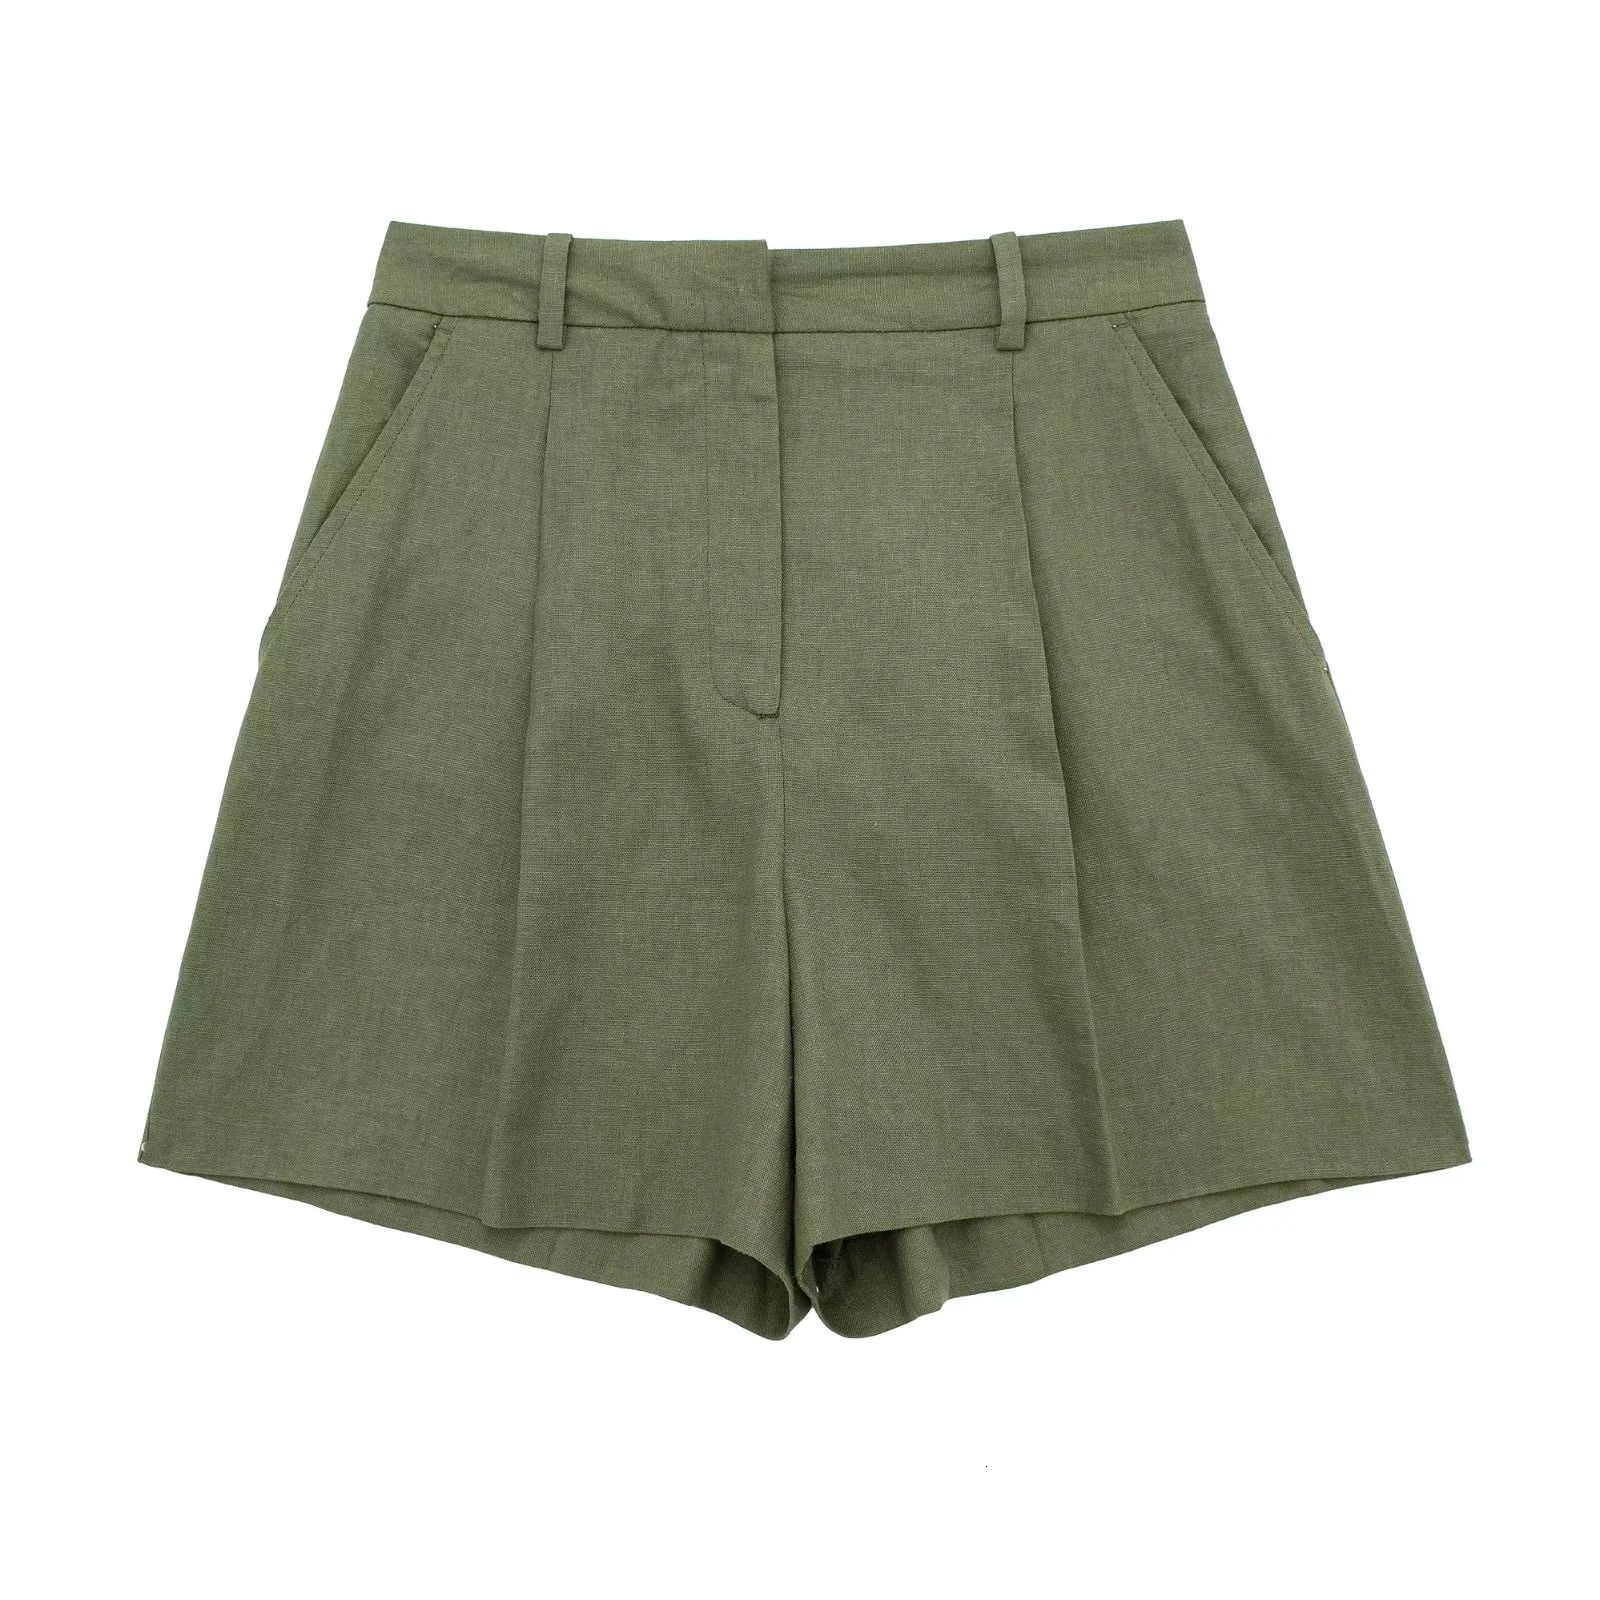 army green shorts